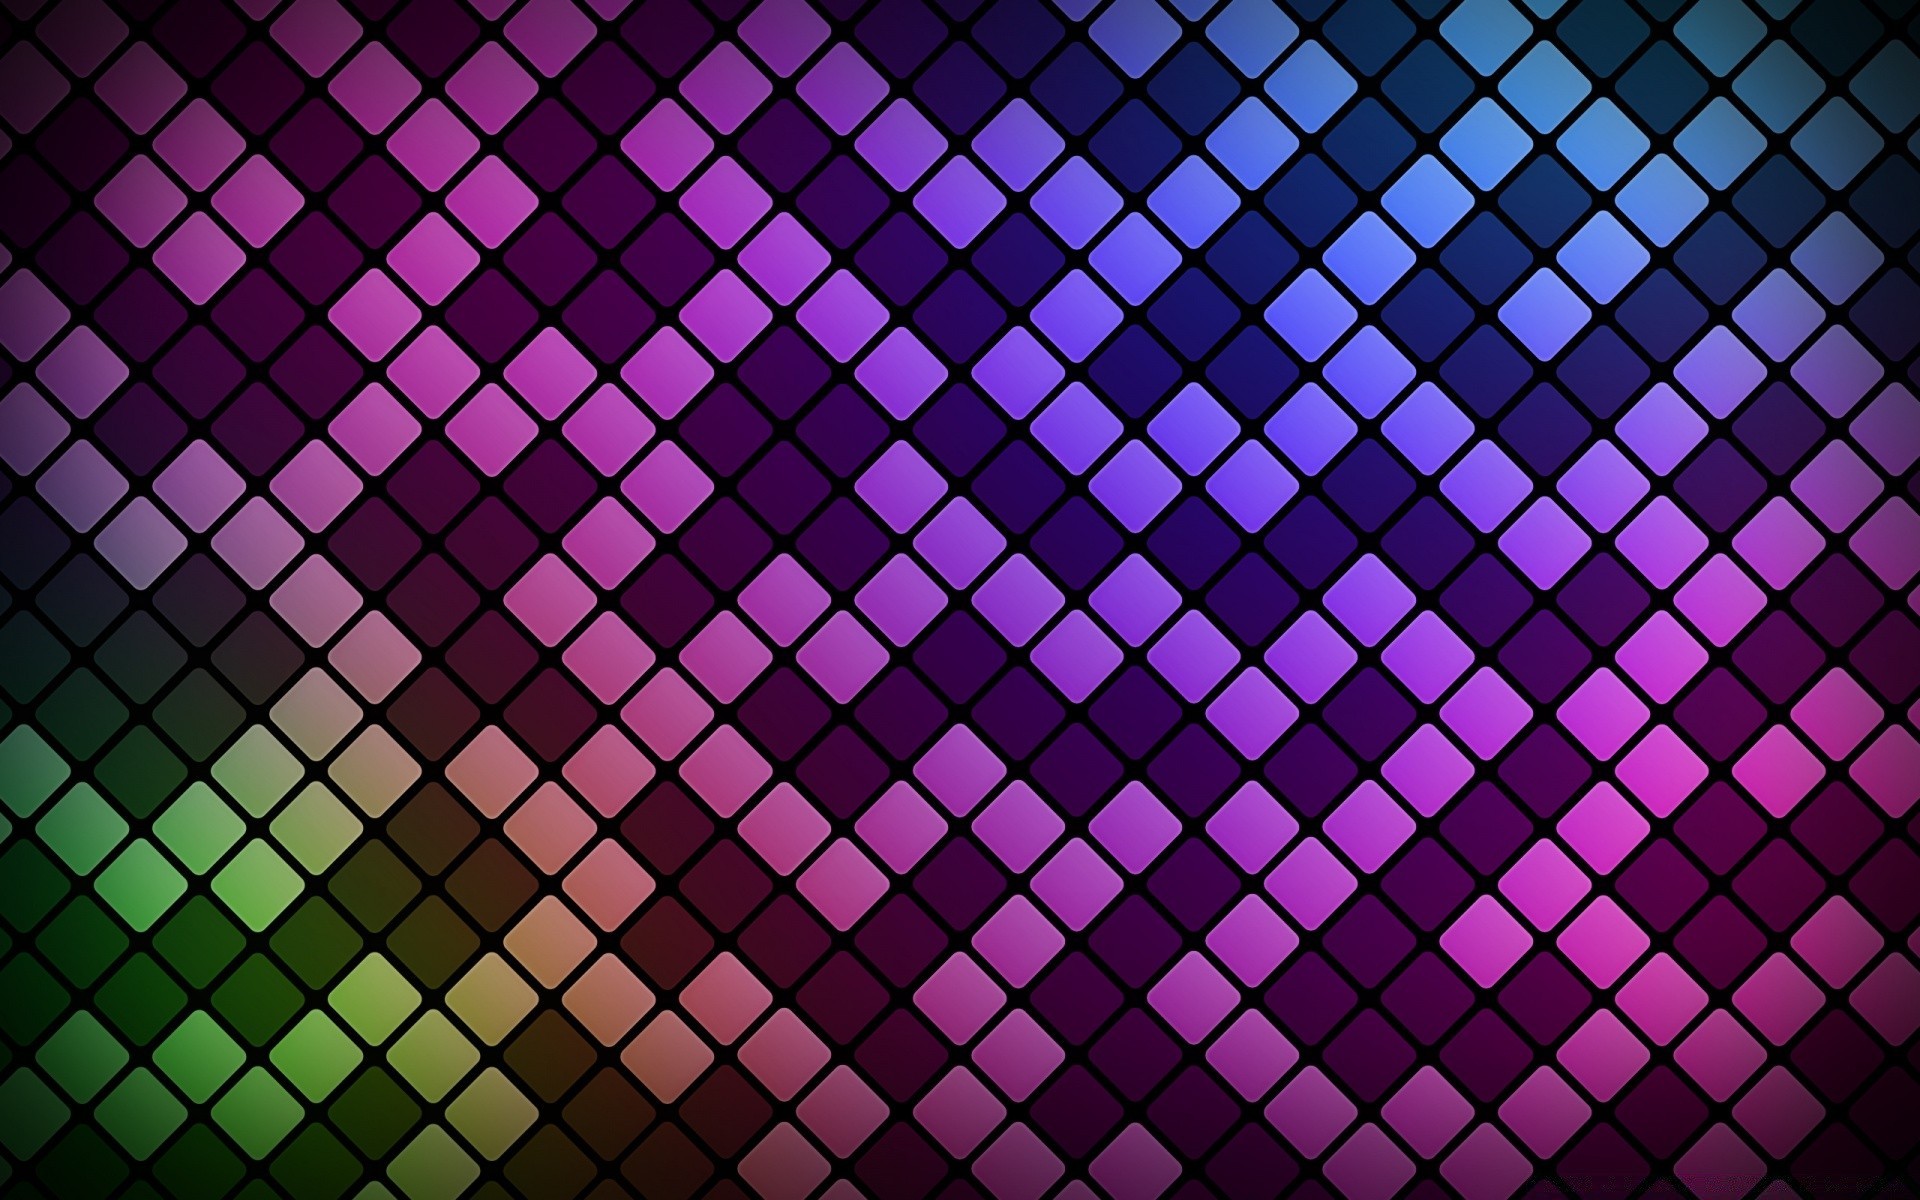 bright colors wallpaper geometric pattern design texture mosaic abstract tile background square graphic seamless desktop art illustration decoration retro shape repetition grid